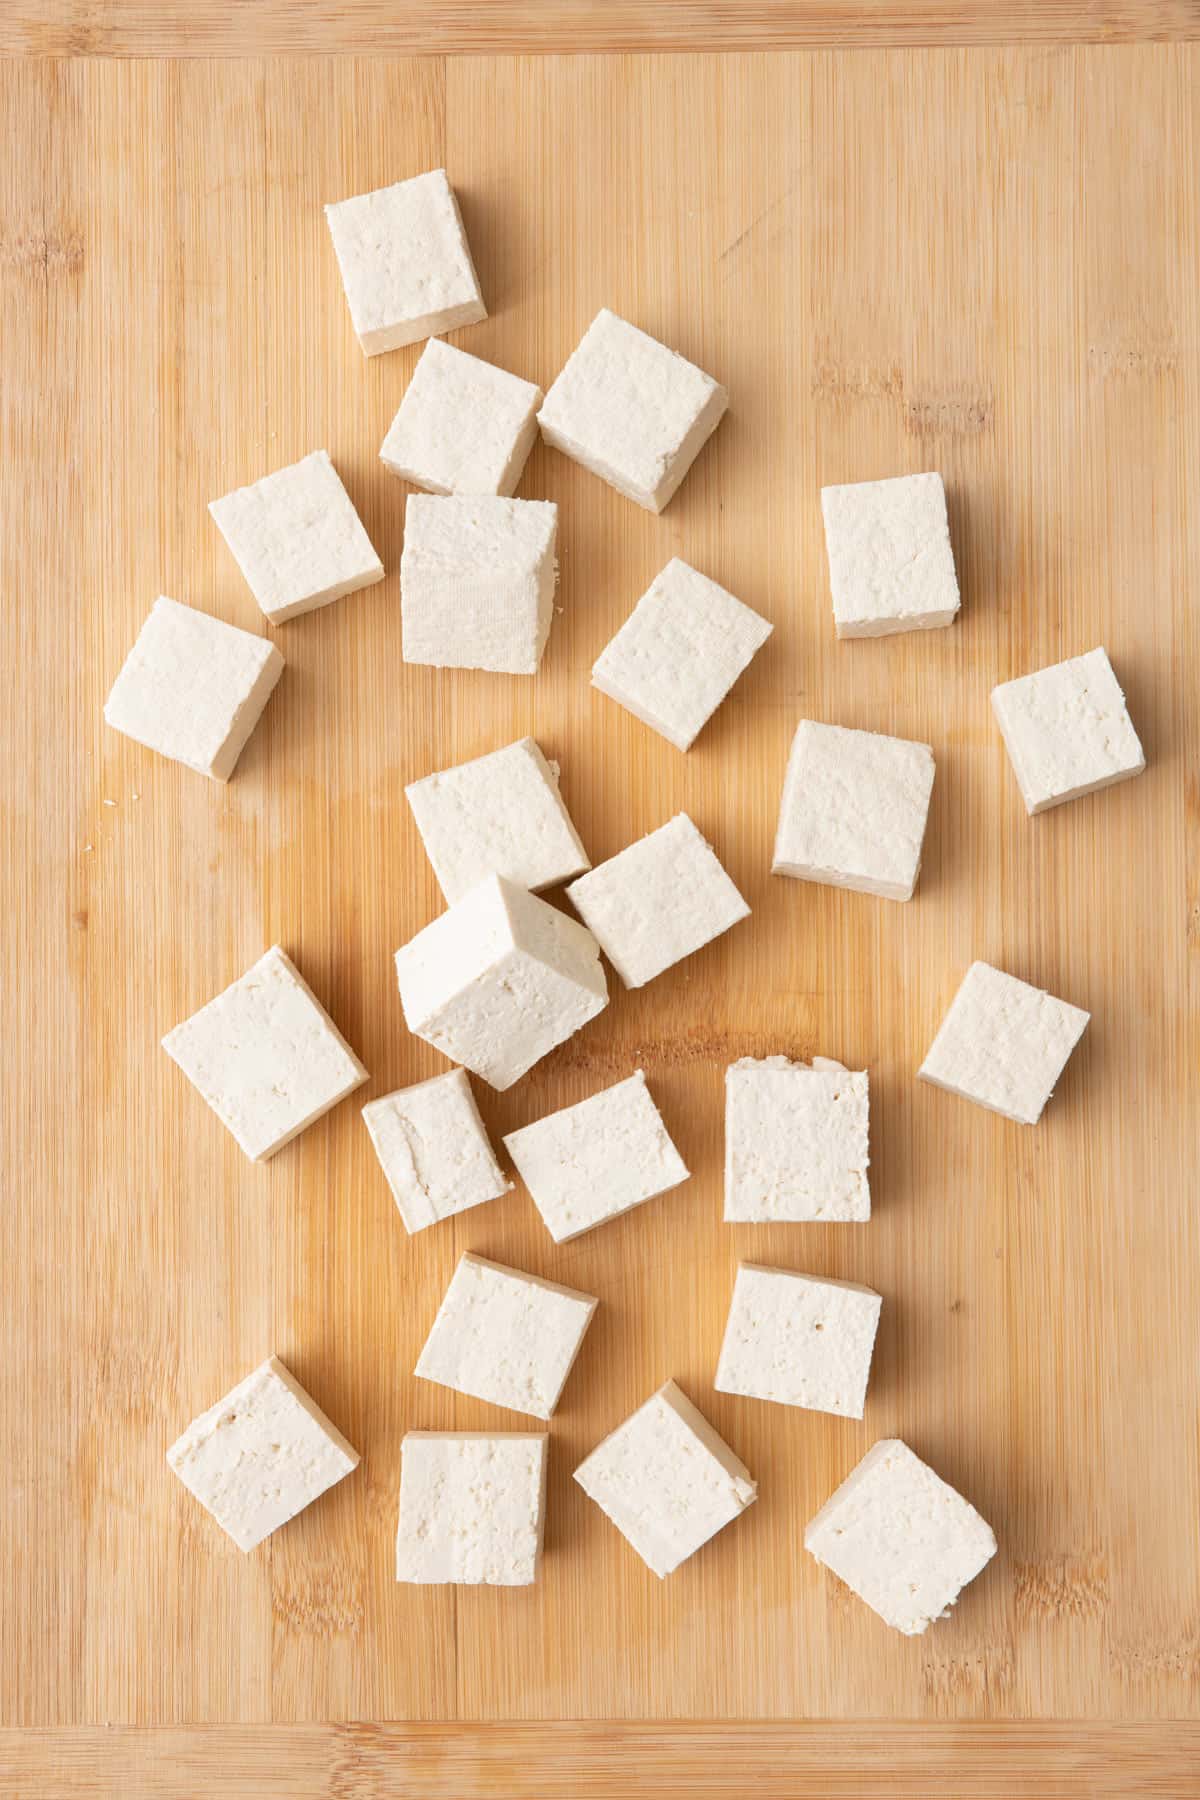 Pressed tofu cut into large cubes.